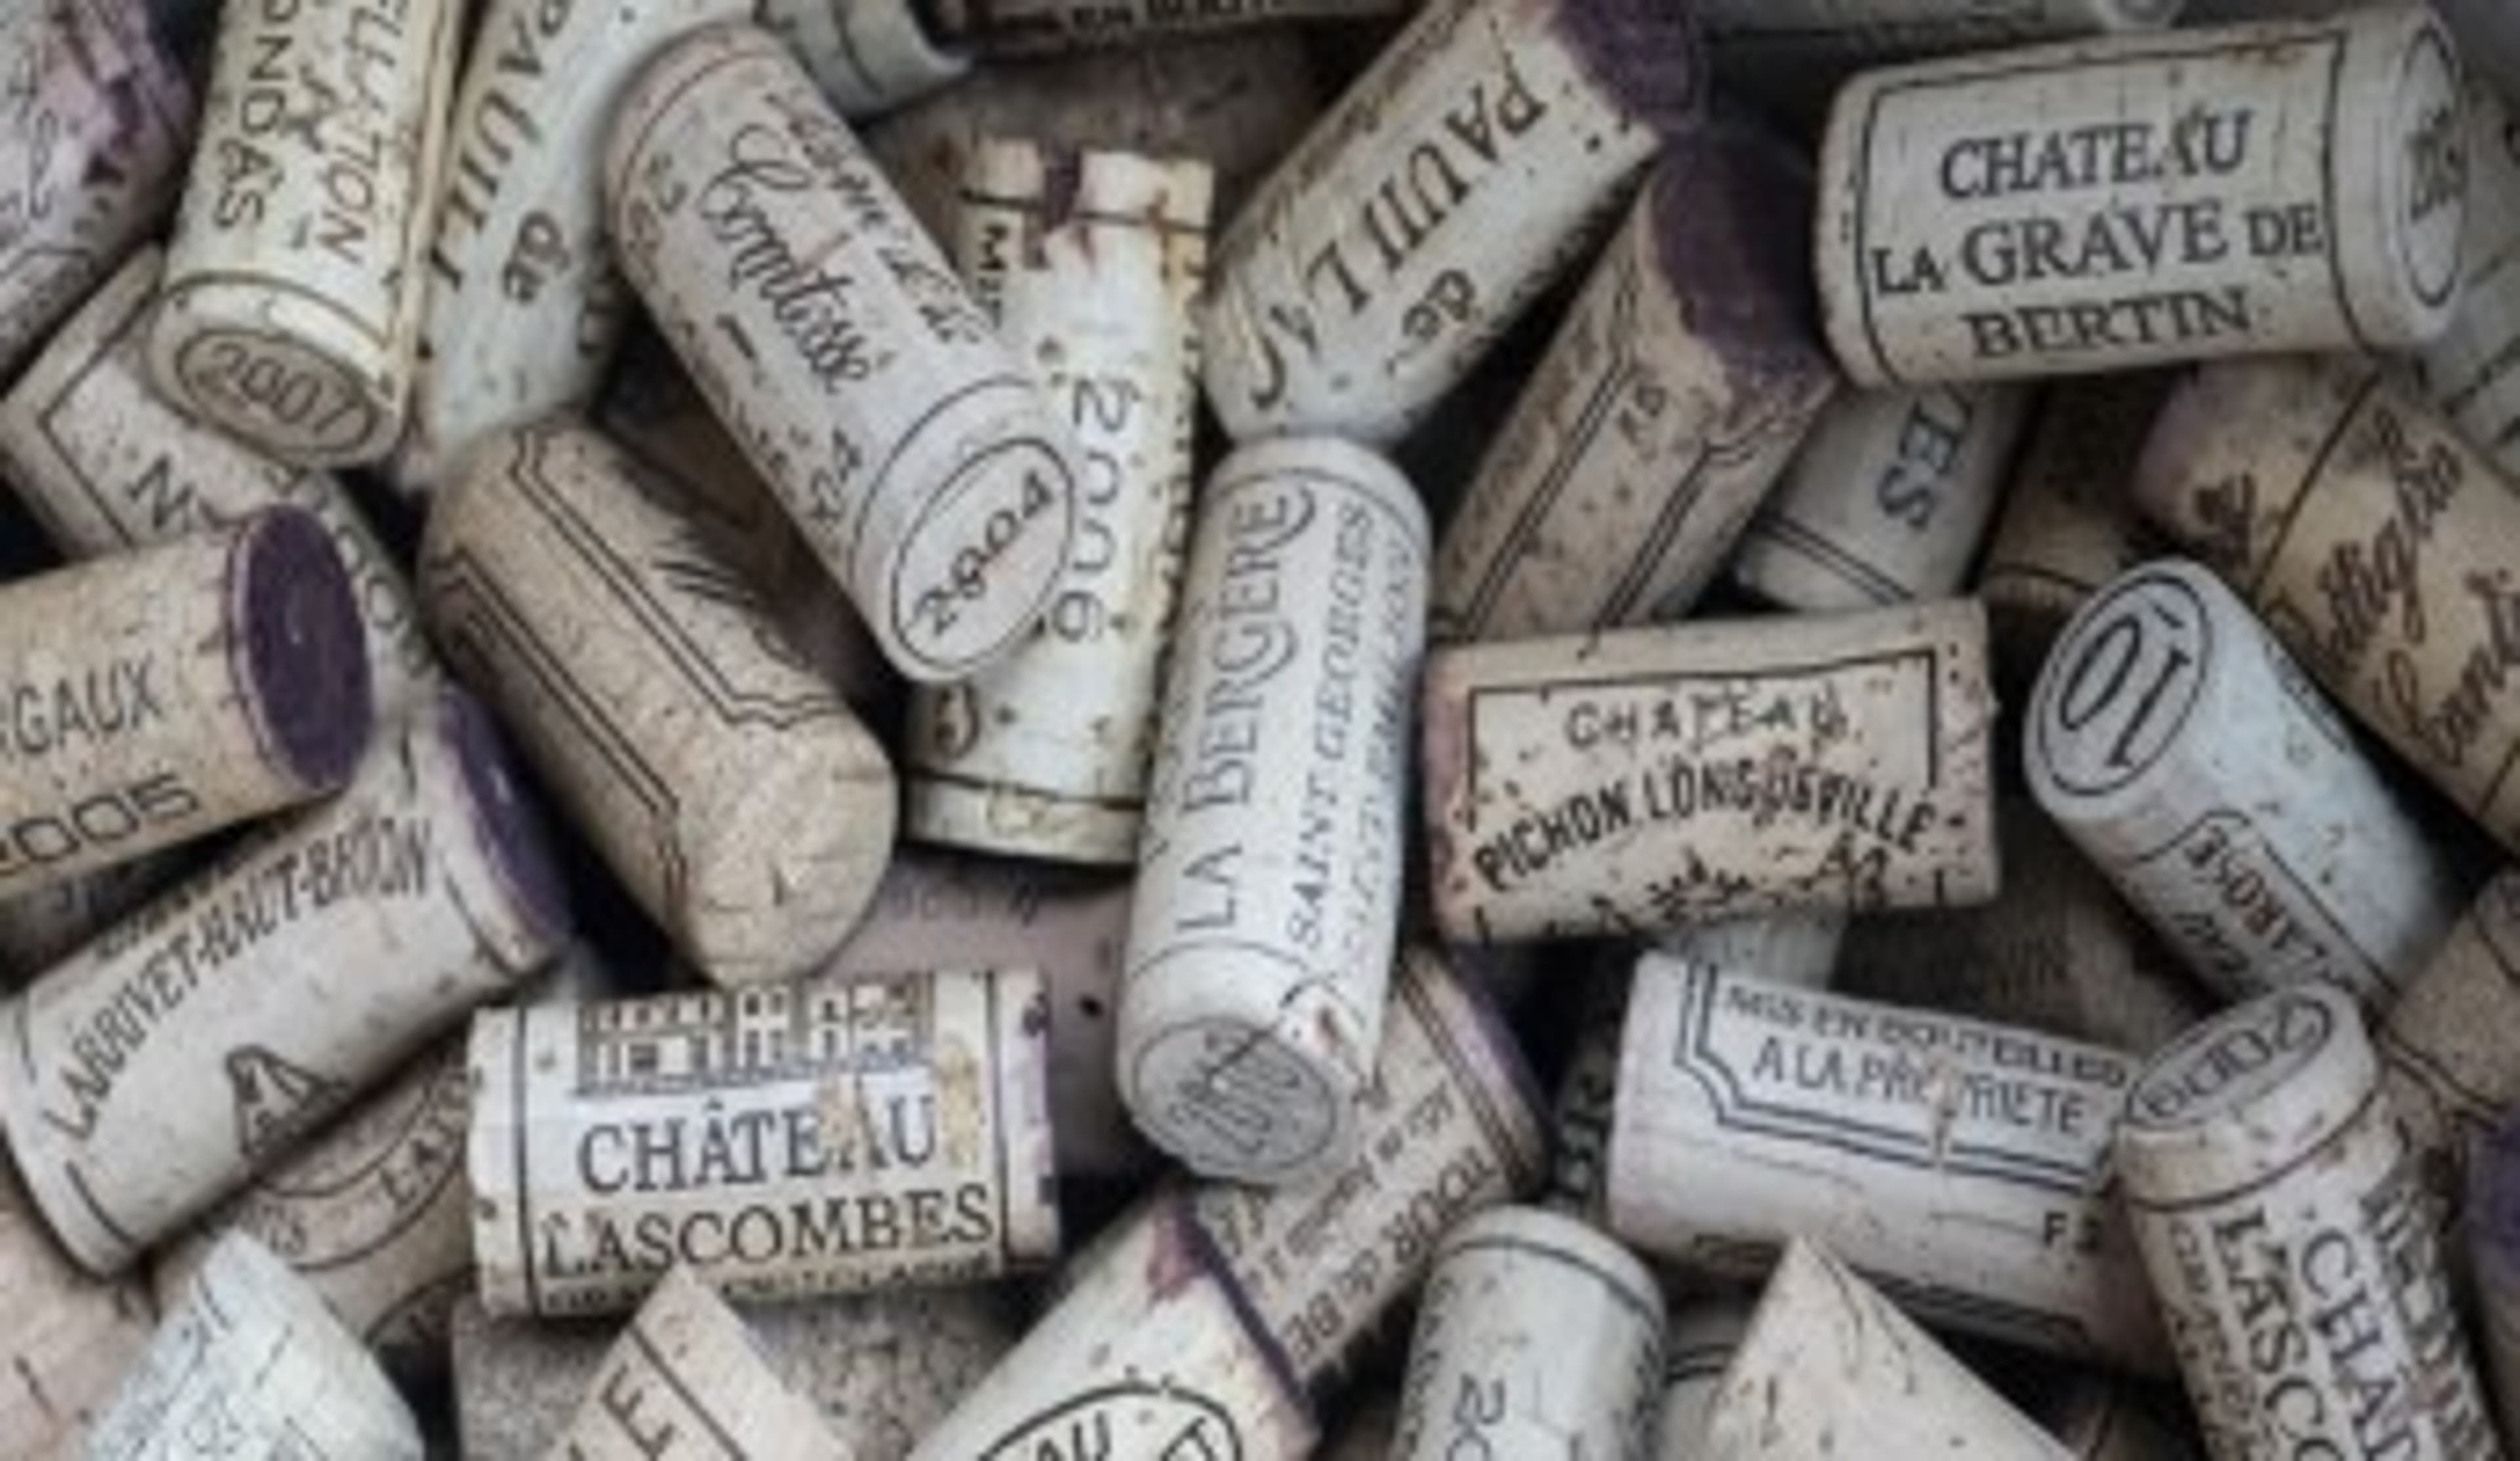  Vintage French wine corks 